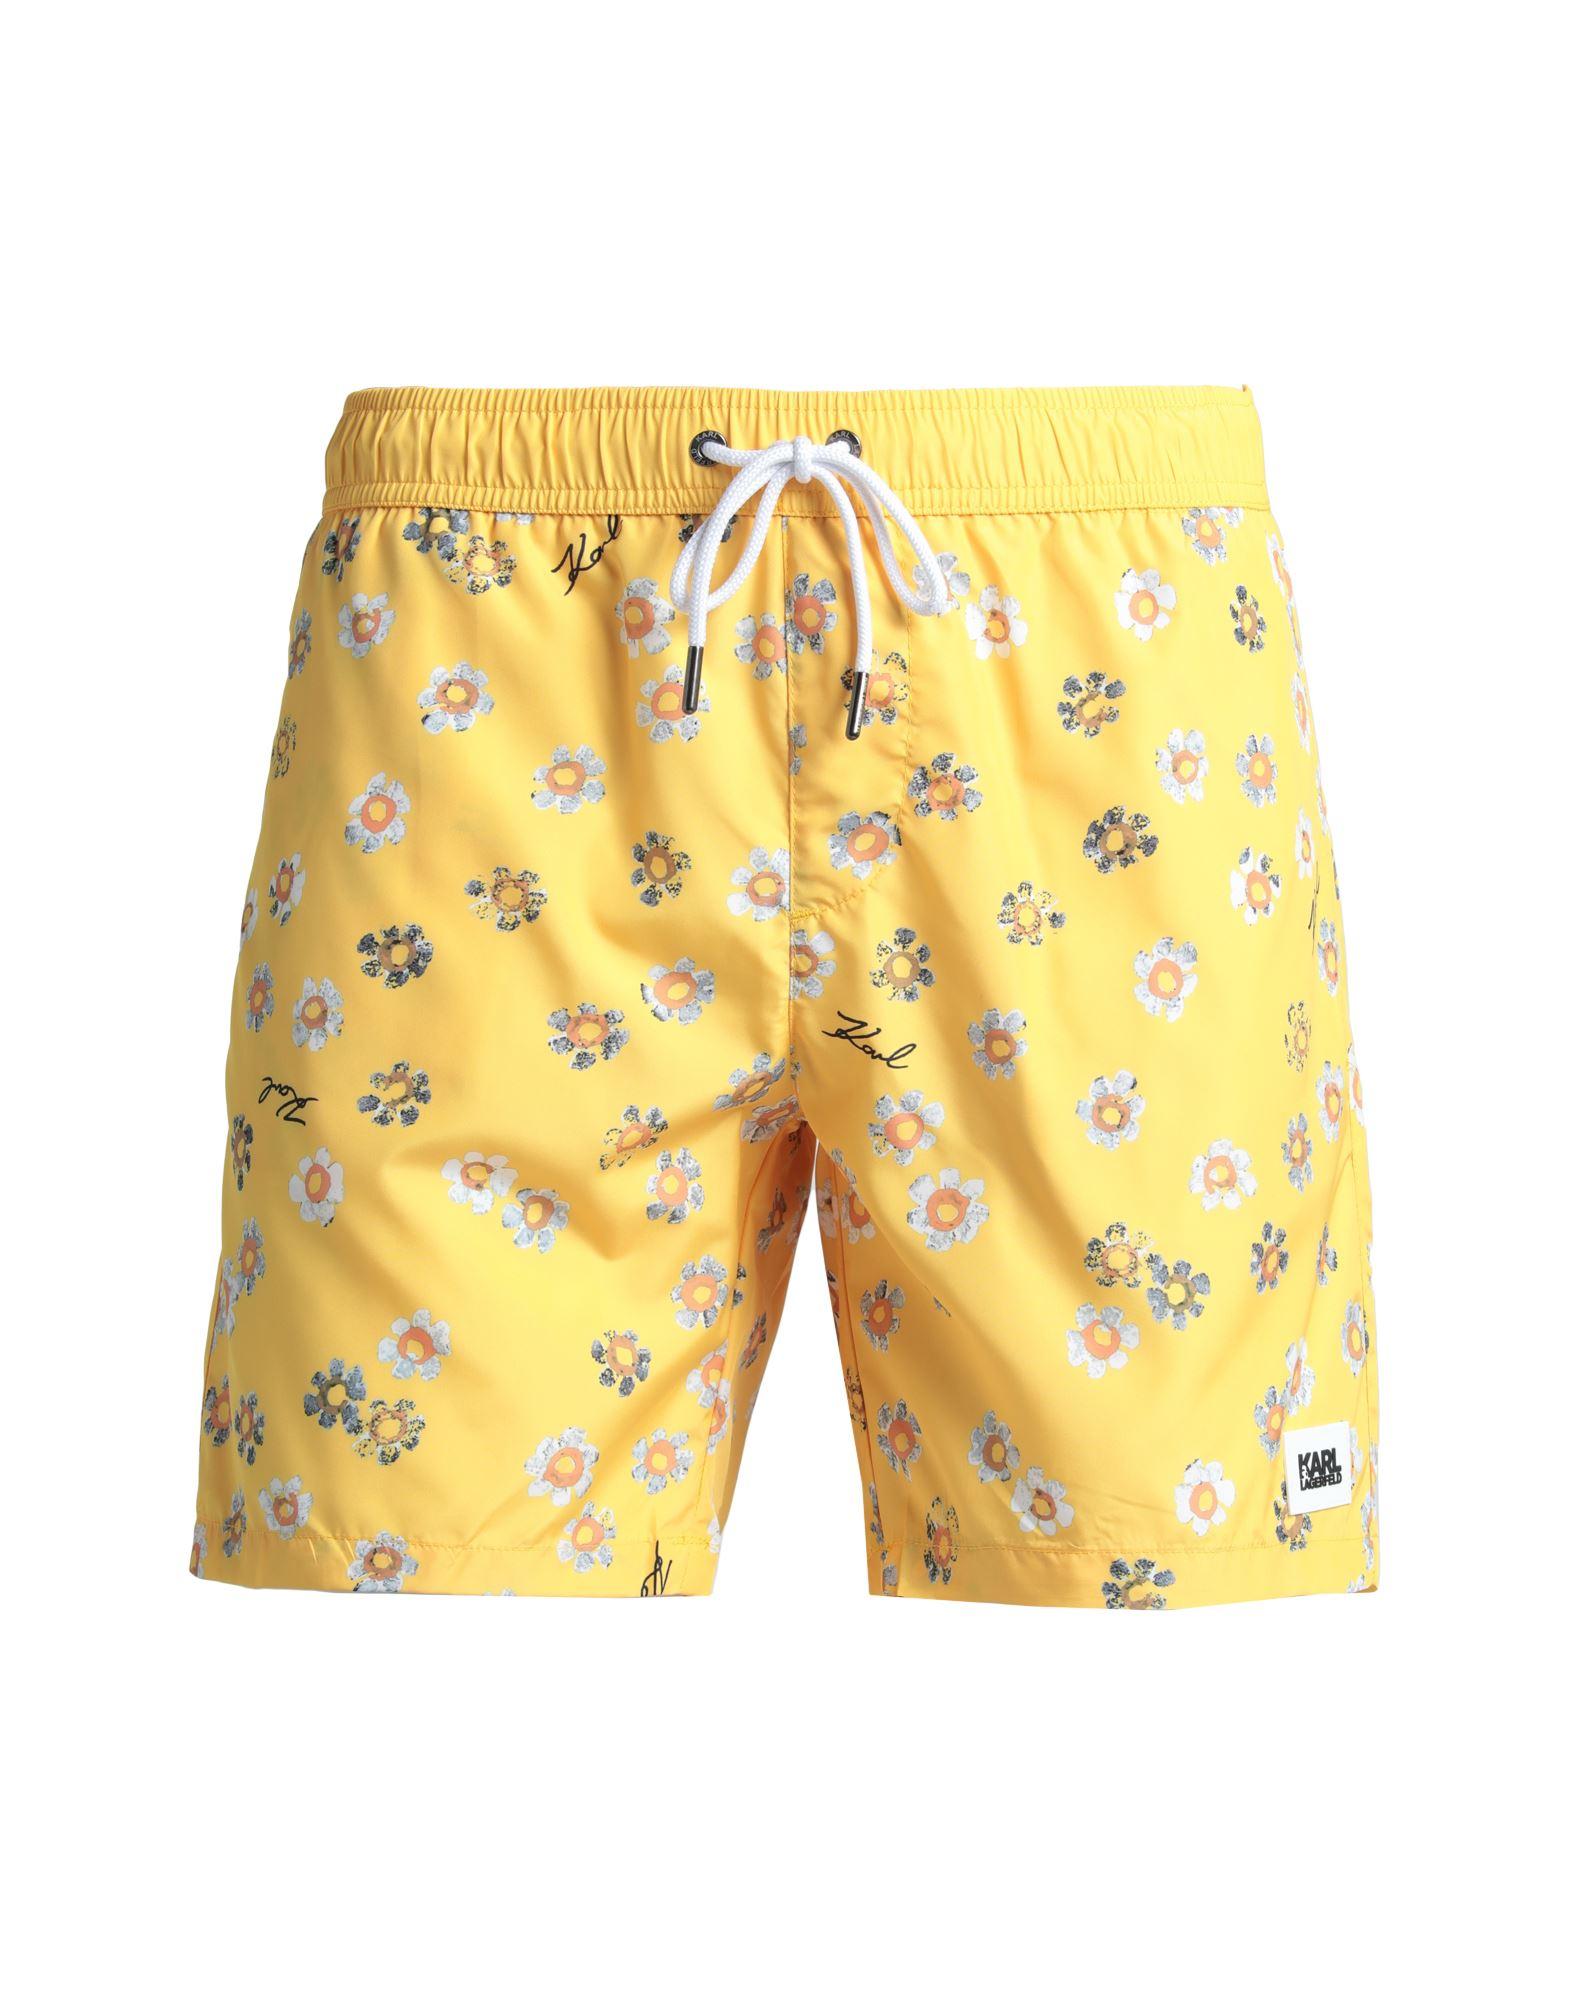 Karl Lagerfeld Synthetic Swim Trunks in Yellow for Men | Lyst